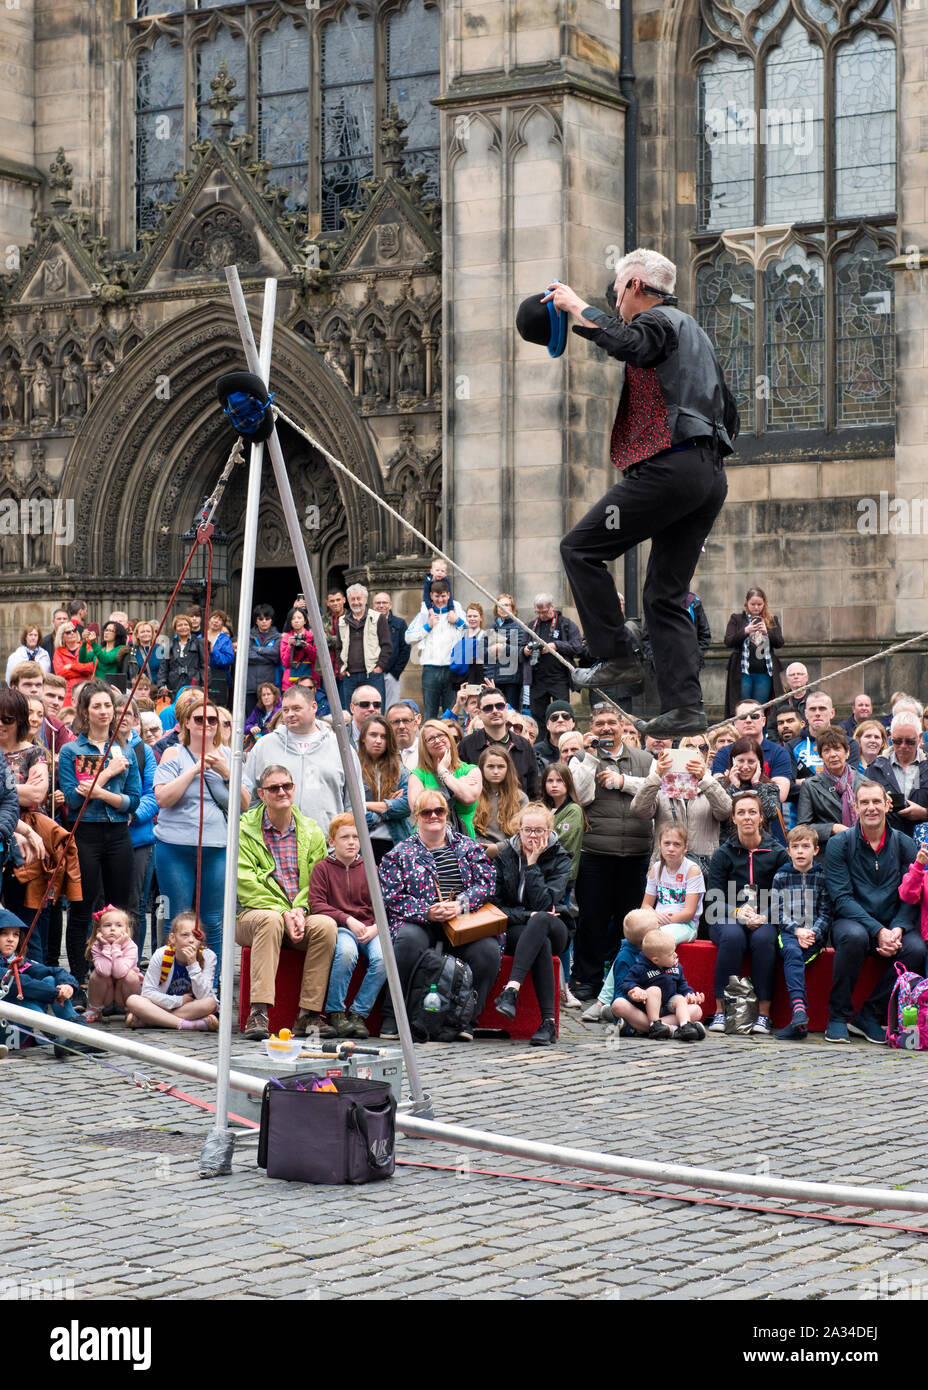 Tightrope street performer during the Edinburgh Fringe Festival. Stock Photo